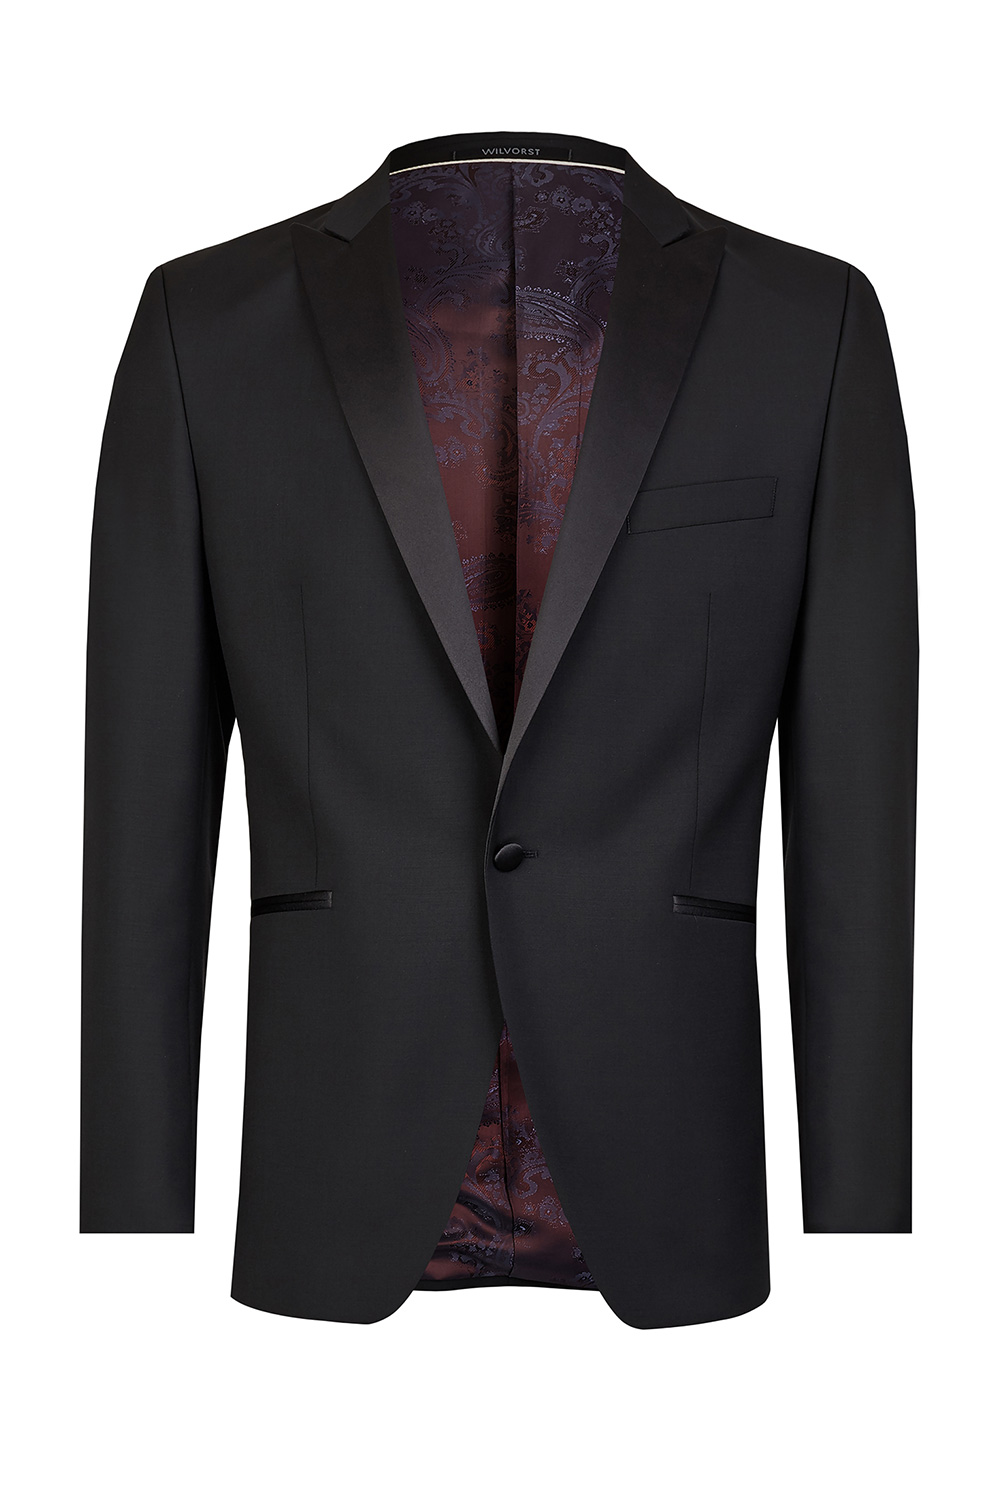 Black Slim Fit Tuxedo - Tom Murphy's Formal and Menswear